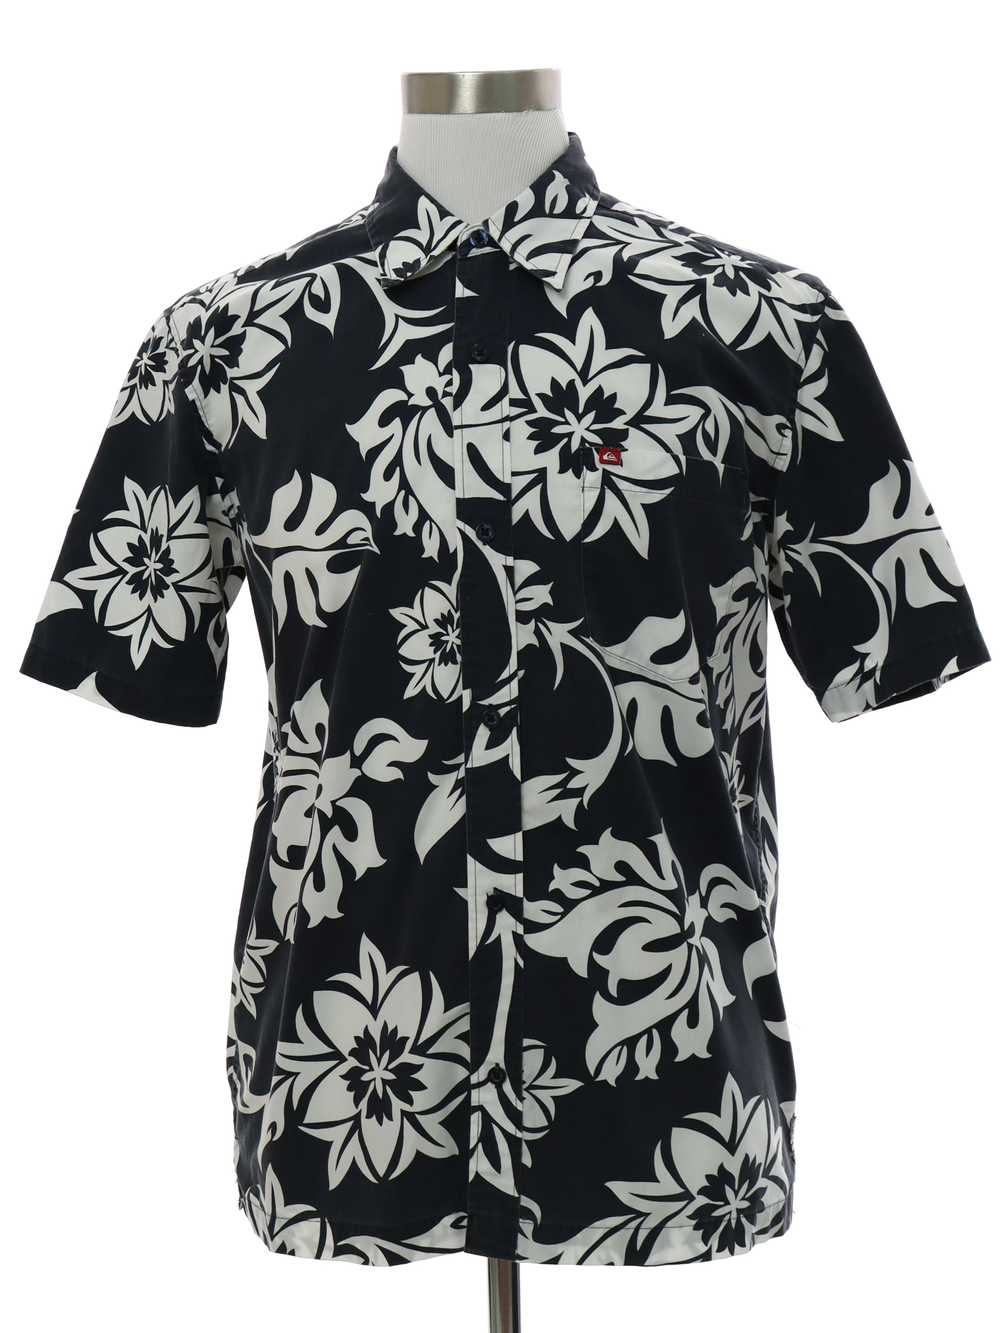 quicksilver hawaiian shirt - Gem